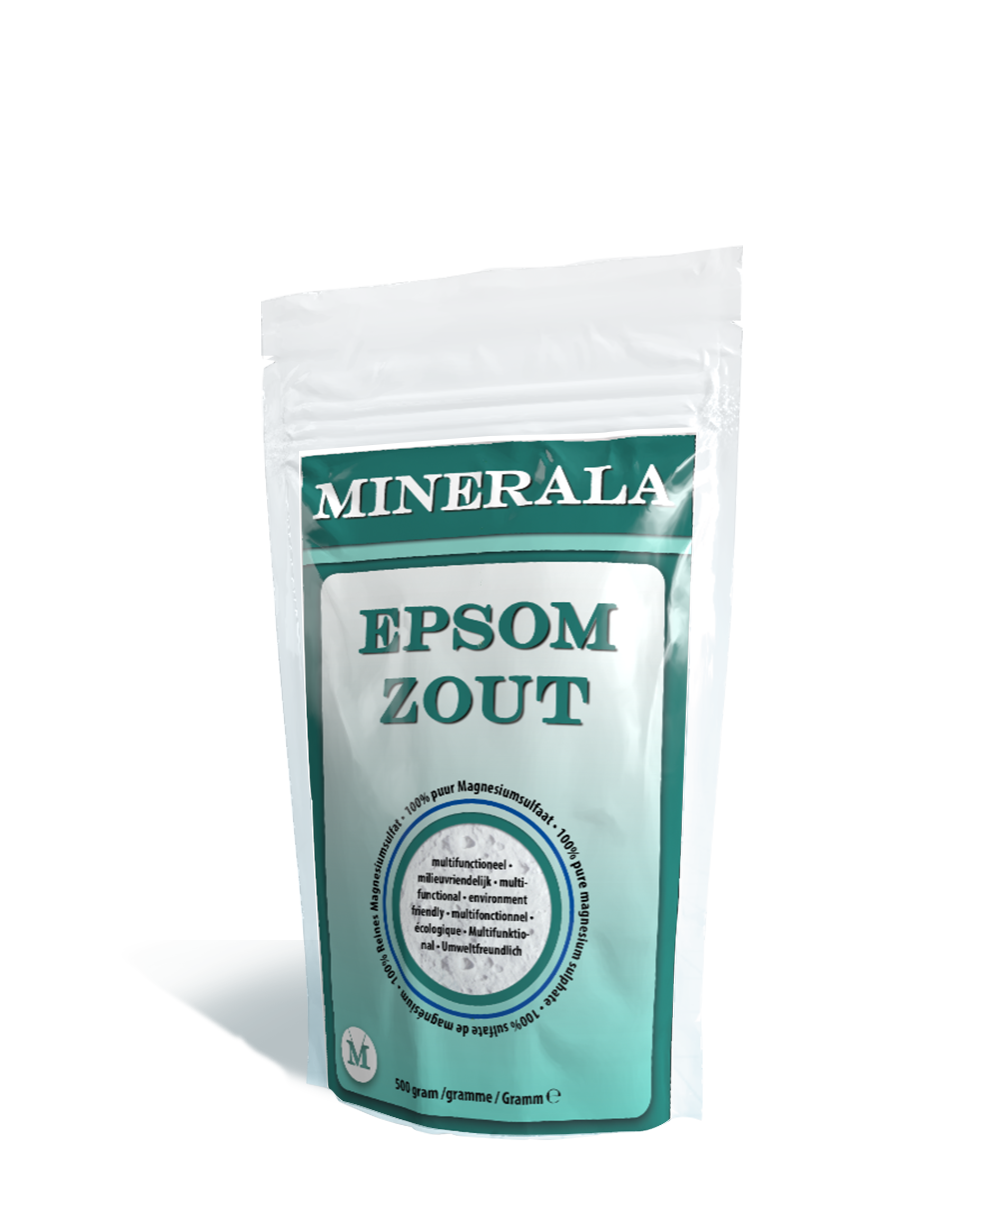 Minerala Basics Epsomzout magnesiumsulfaat Baking Soda NL Nistelrode